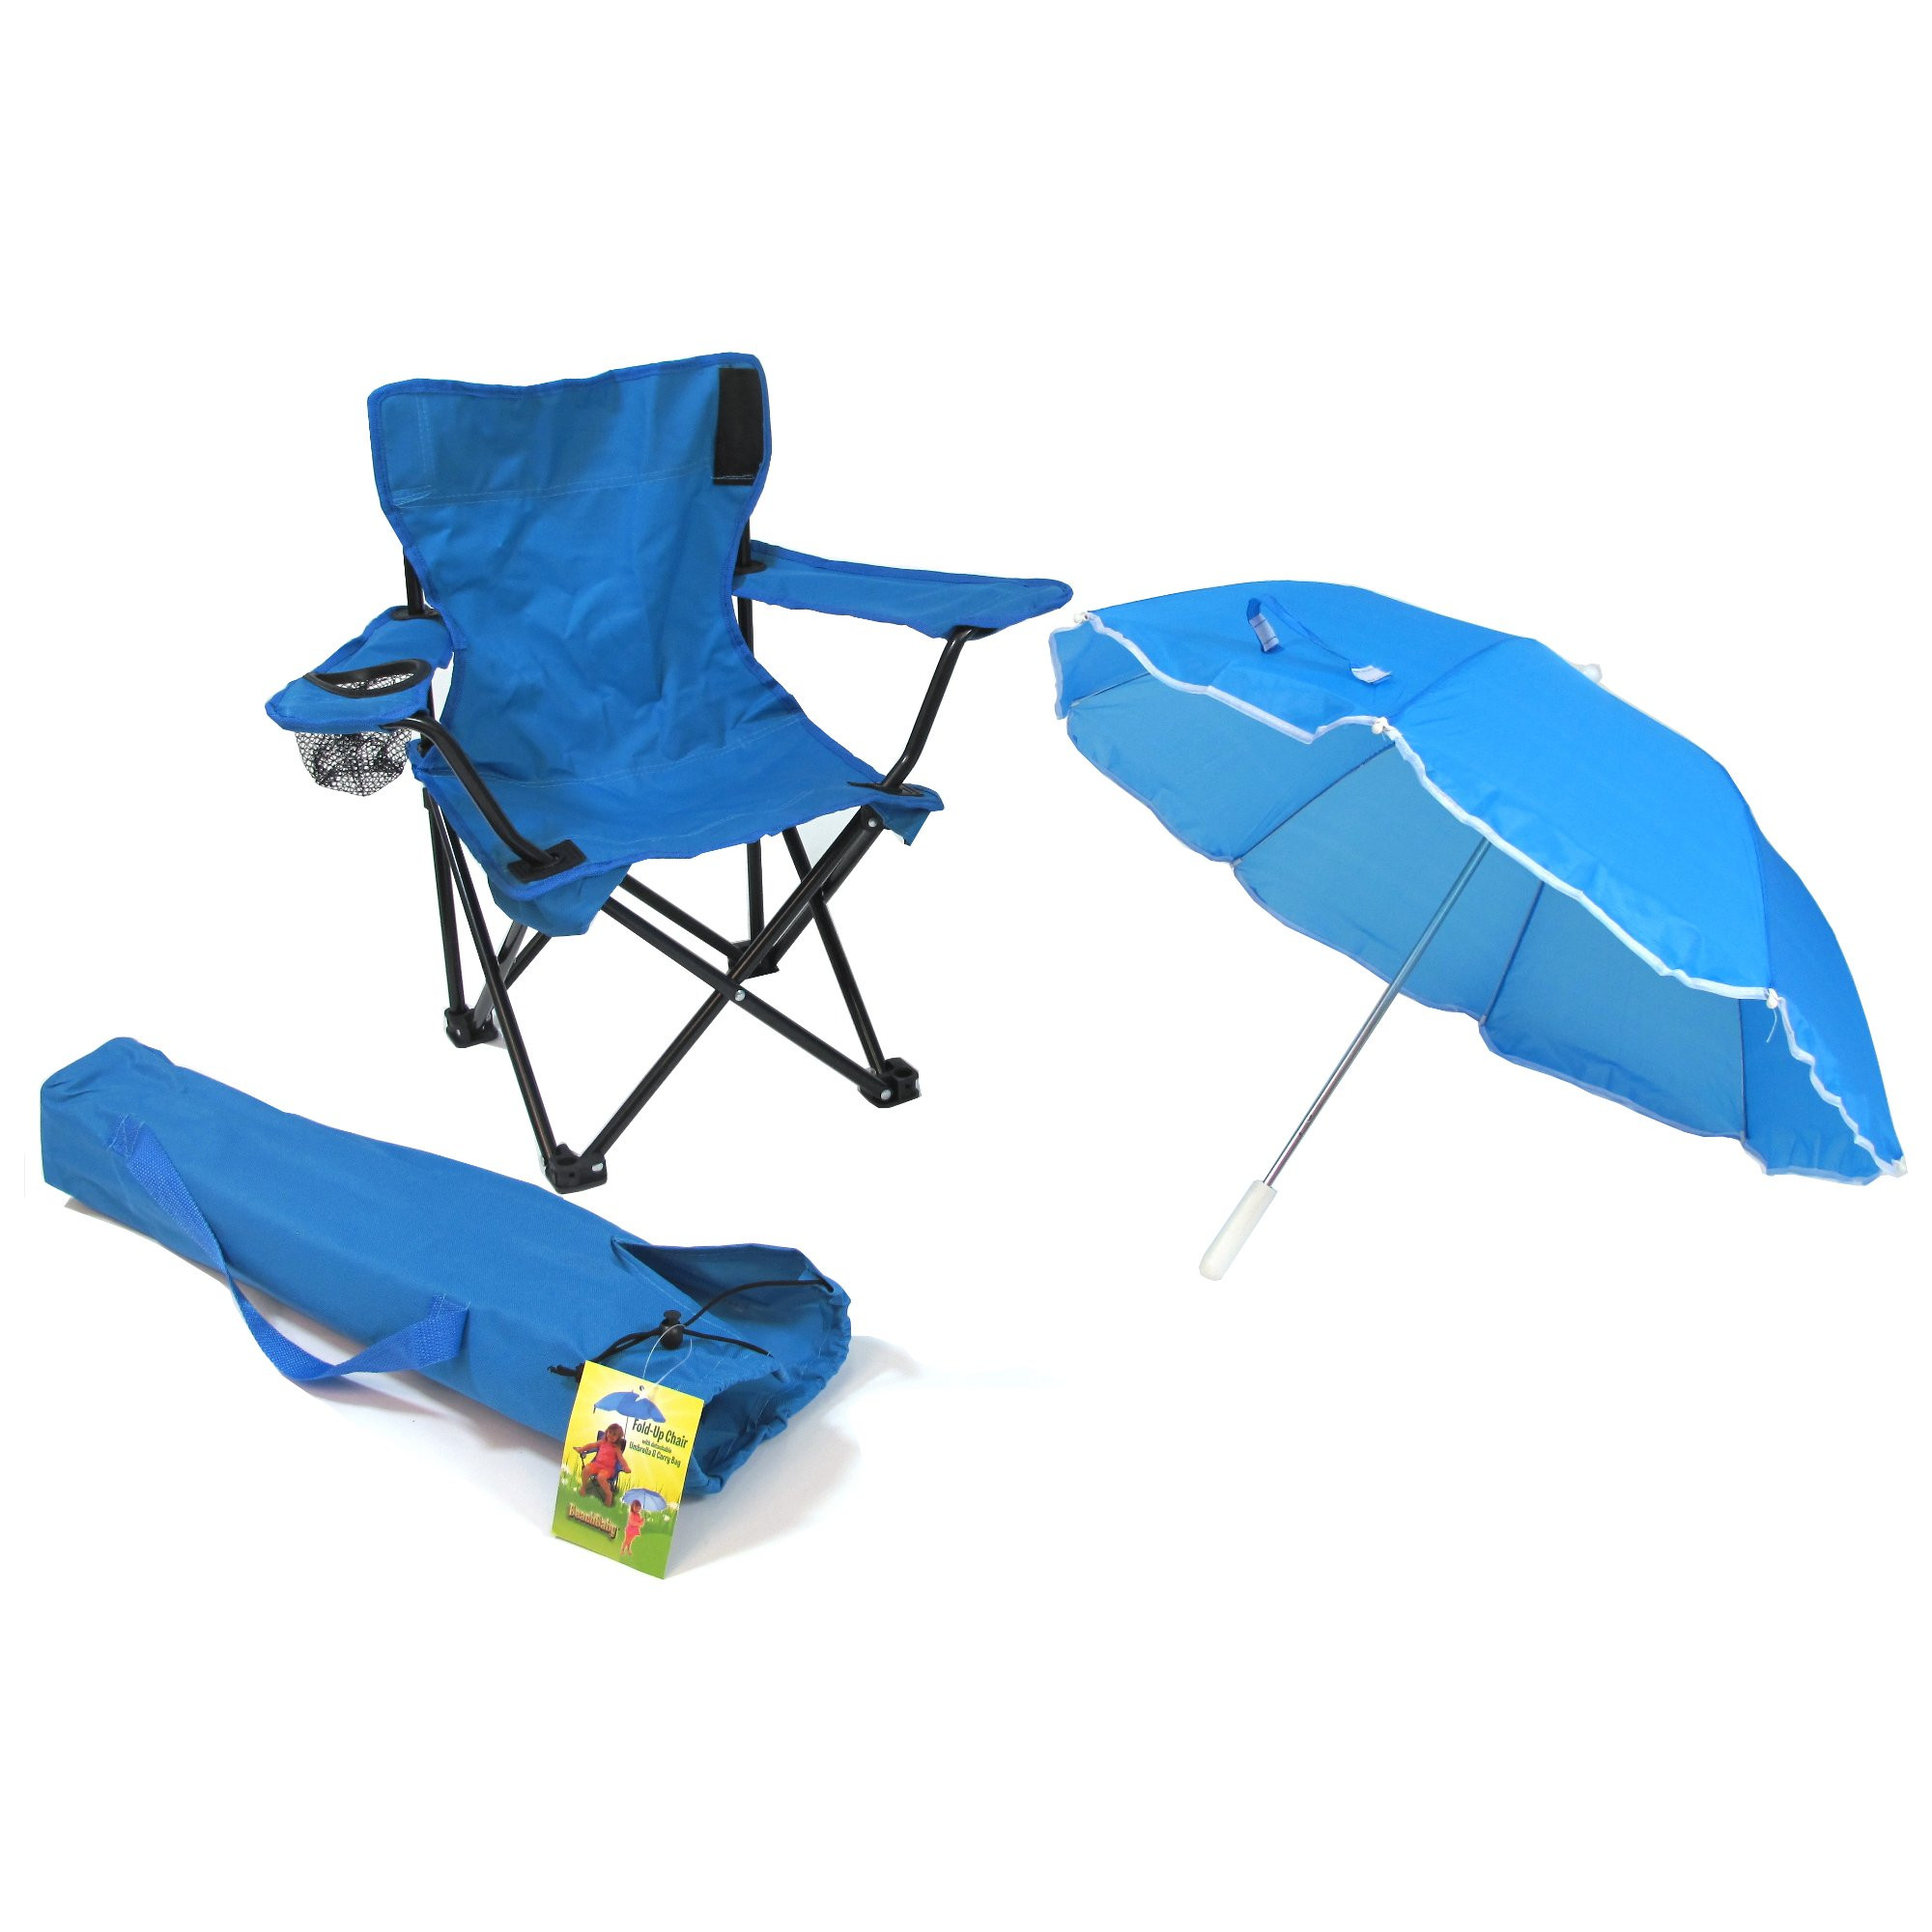 Kids Beach Chair With Umbrella
 Portable Outdoor Kids Beach Camping Folding Chair with